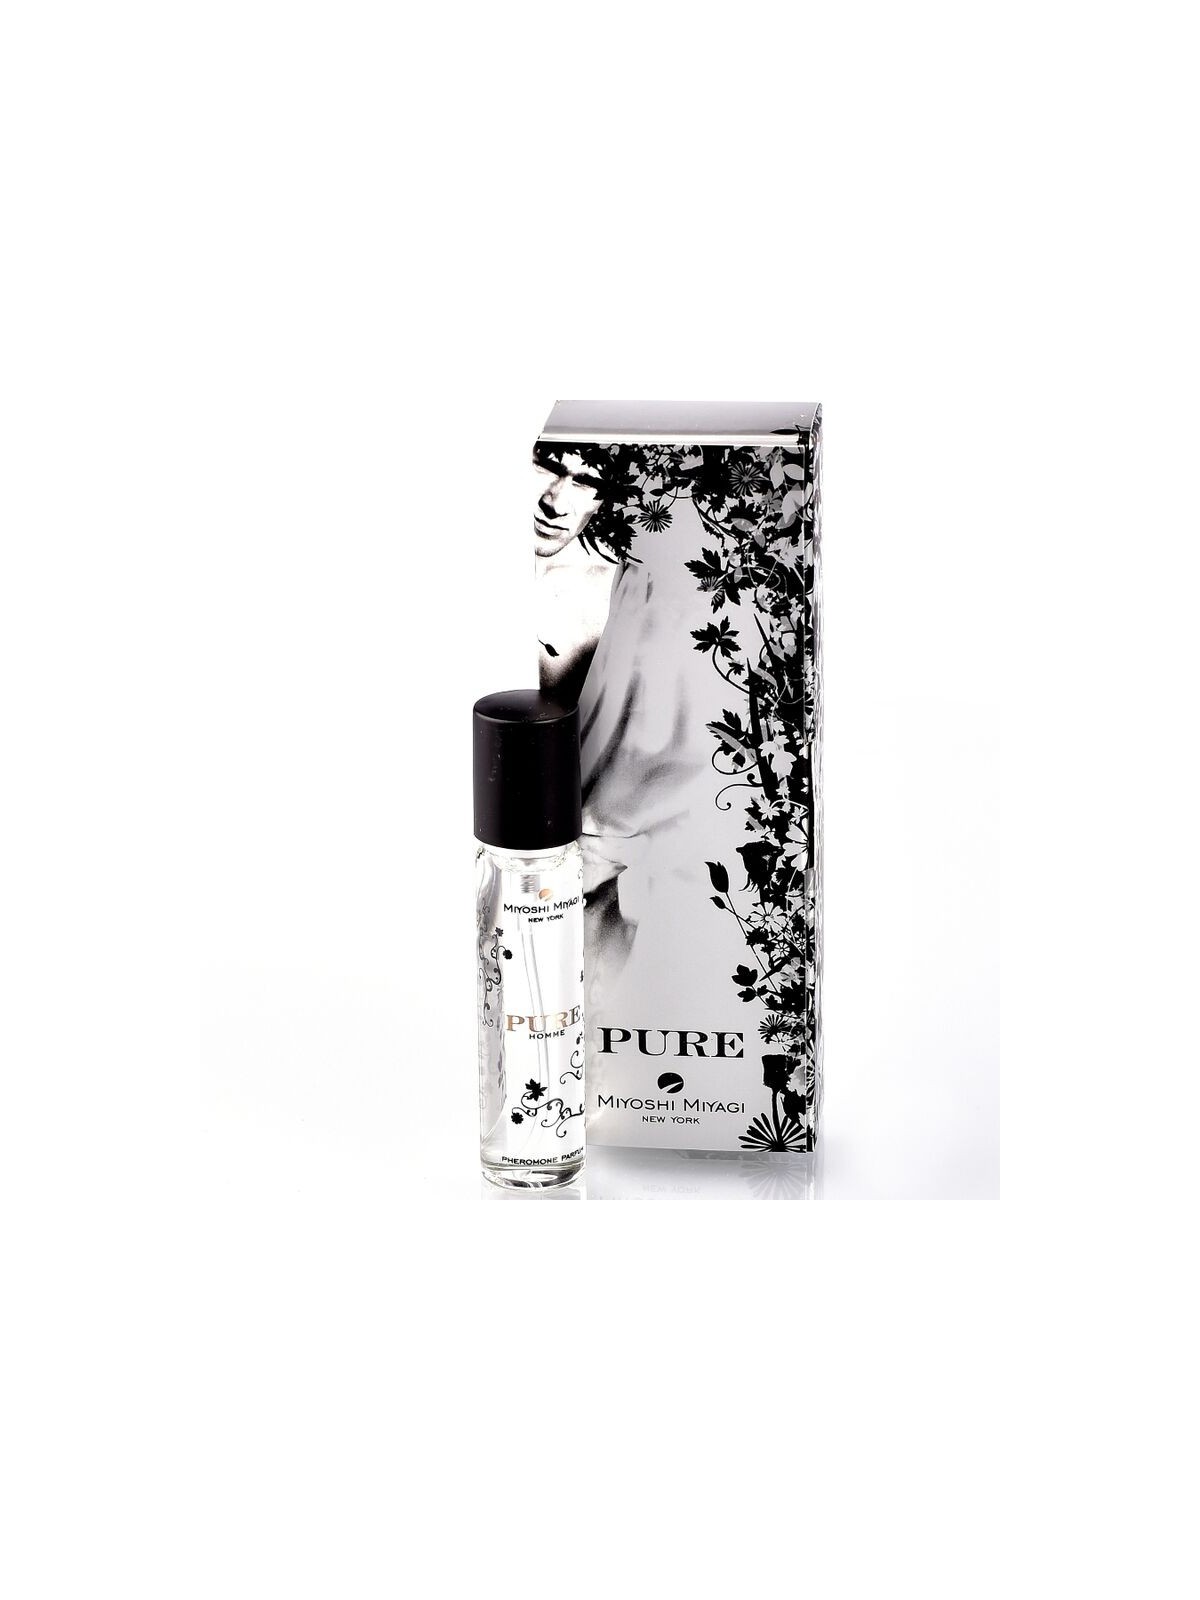 Hiroshi Miyagi Pure Phromones Perfume Para Hombre 15 ml - Comprar Perfume feromona Miyoshi Miyagi - Perfumes con feromonas (1)